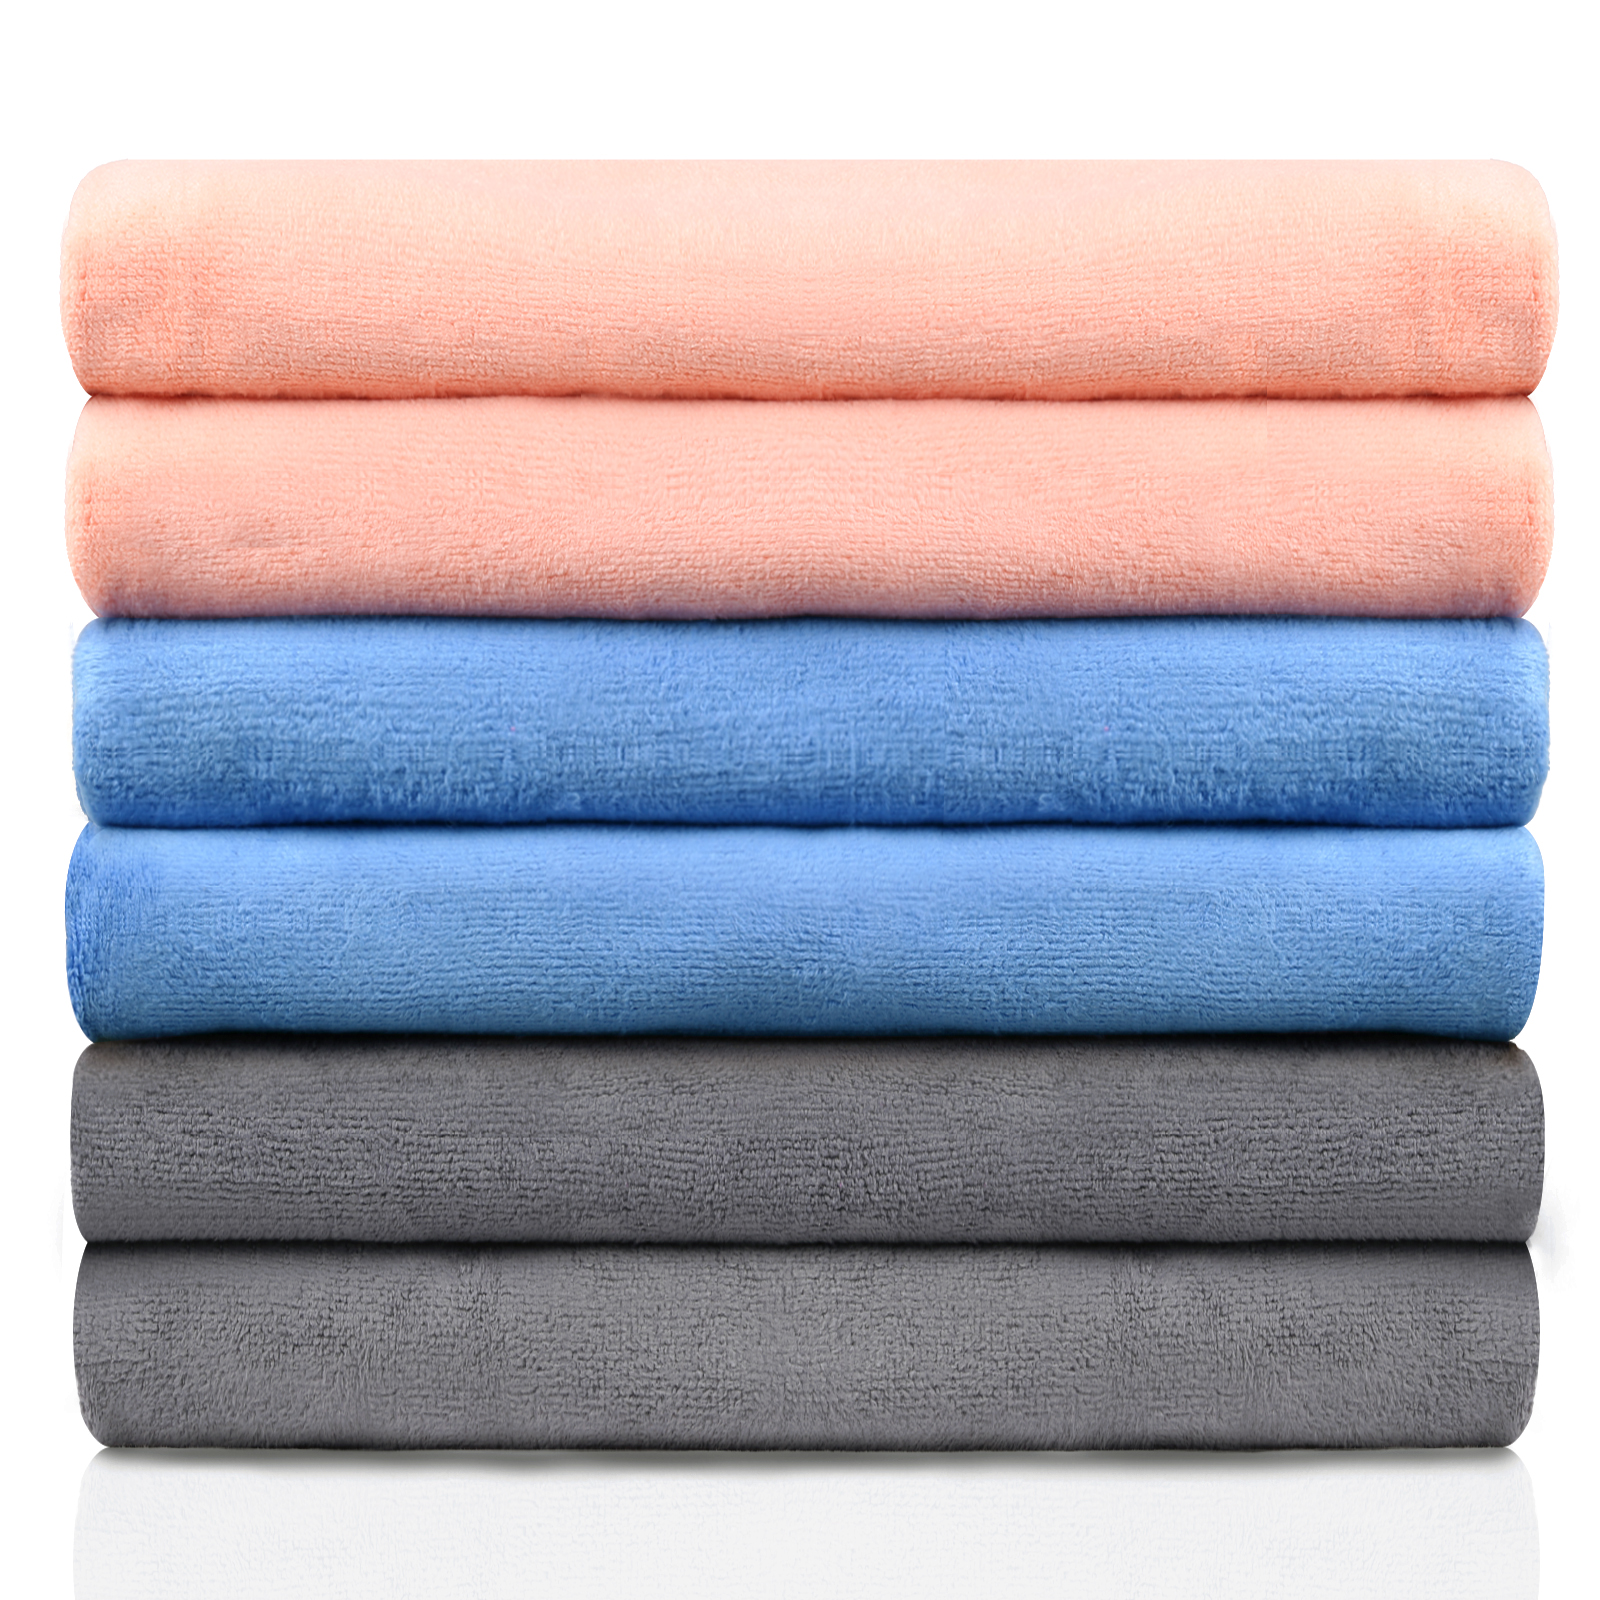 JML Bath Towel, Microfiber 6 Pack Towel Sets (27 x 55") - Extra Absorbent, Fast Drying Multipurpose Use as Bath Fitness Towel, Sports Towels, Yoga Towel, Orange Grey Light Blue - image 1 of 5